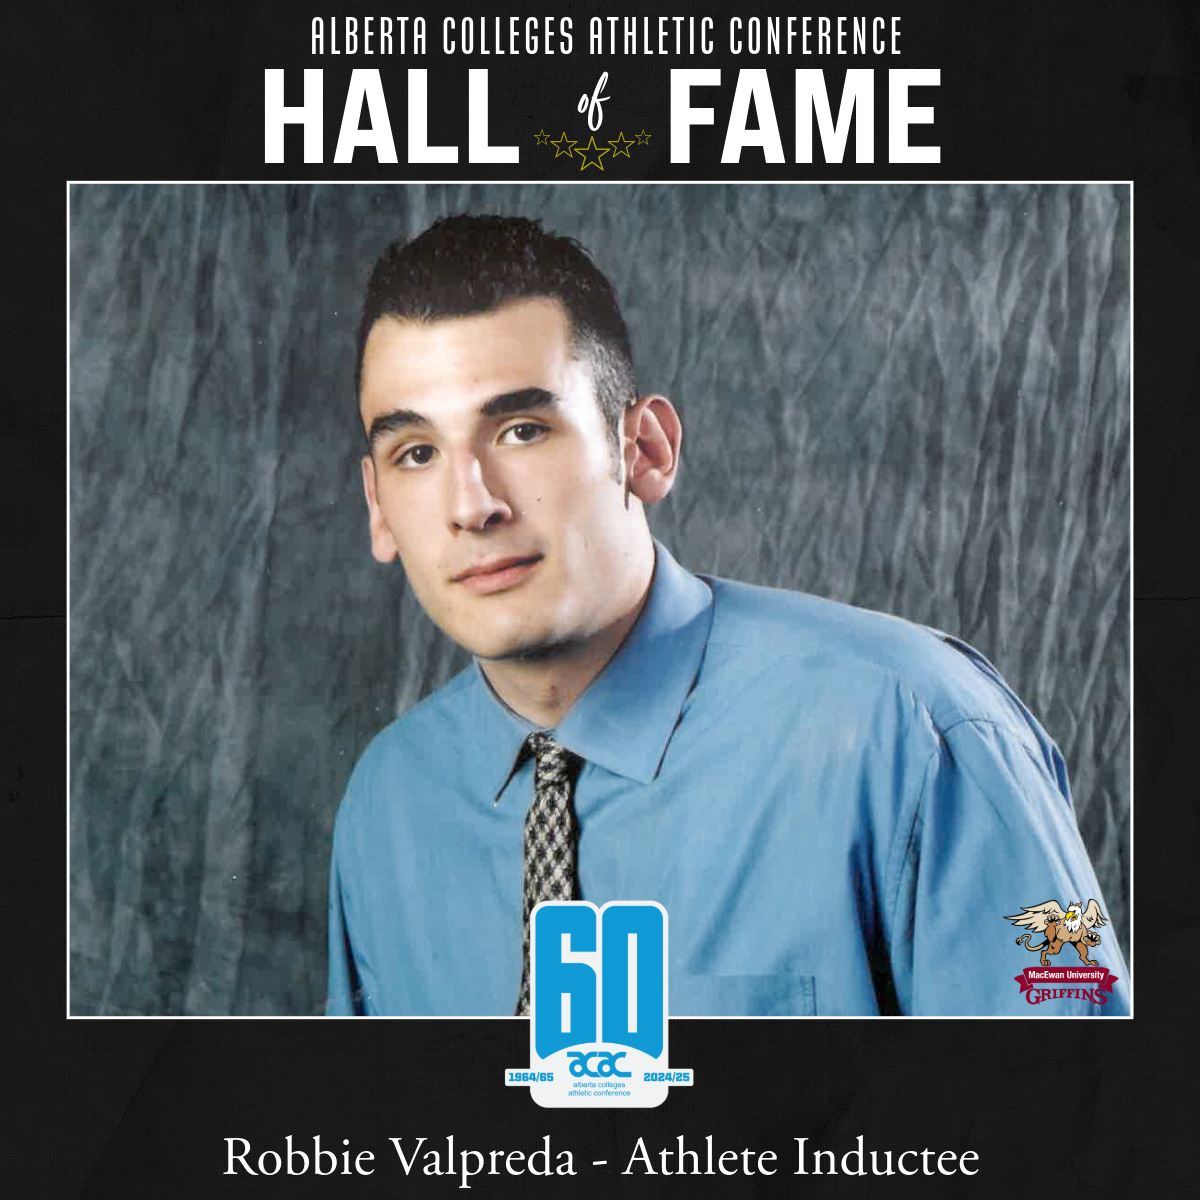 ACAC Hall of Fame Athlete Inductee: Robbie Valpreda